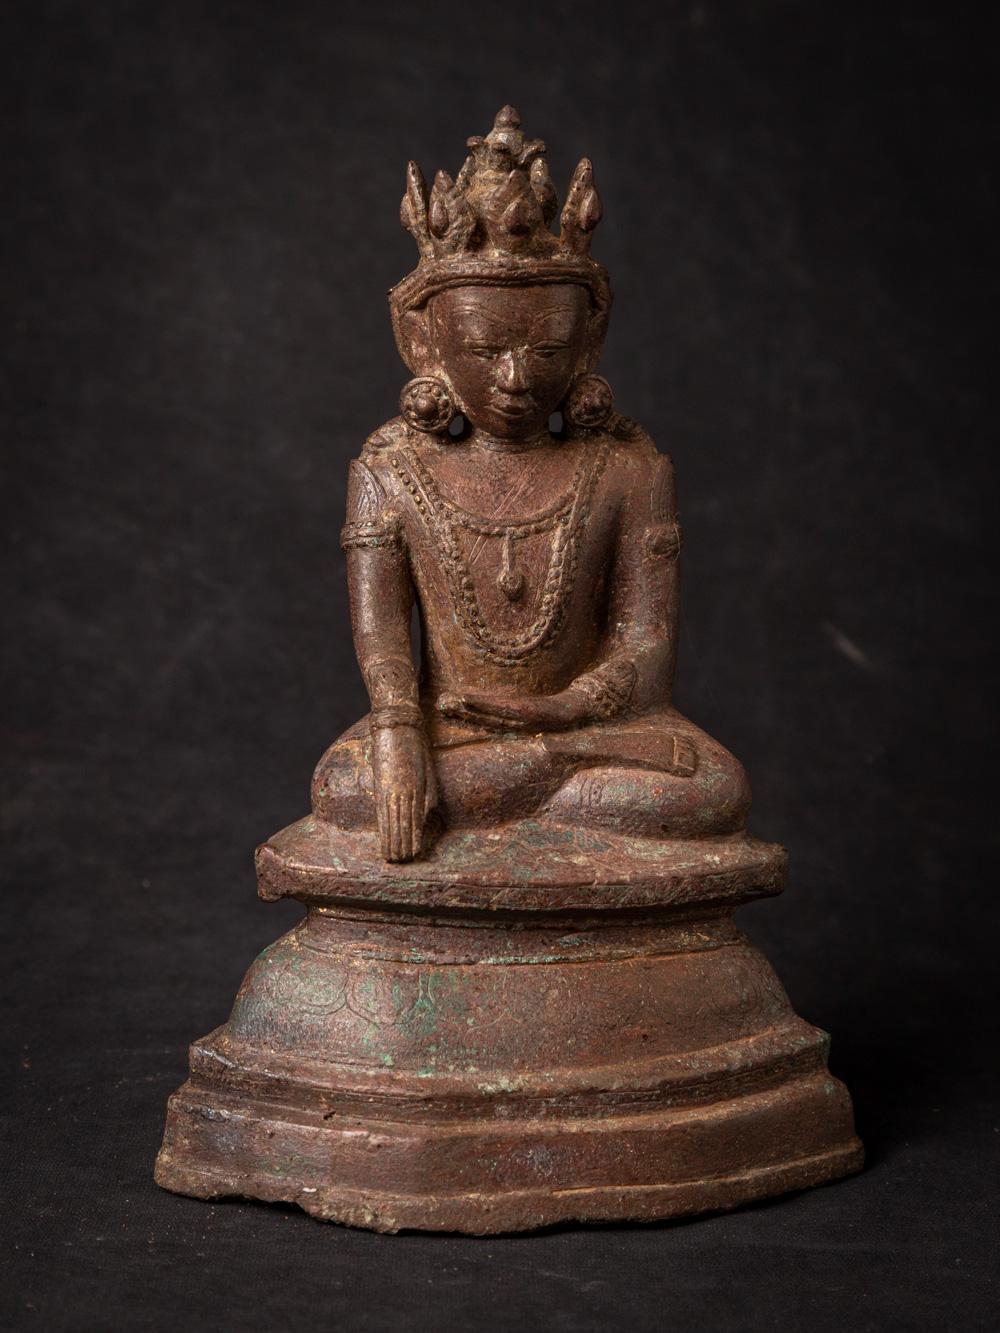 Material : bronze
22,8 cm high
15,5 cm wide and 10 cm deep
Arakan style
Bhumisparsha mudra
14-15th century
Weight: 1,66 kgs
Originating from Burma
Nr: 3814-11